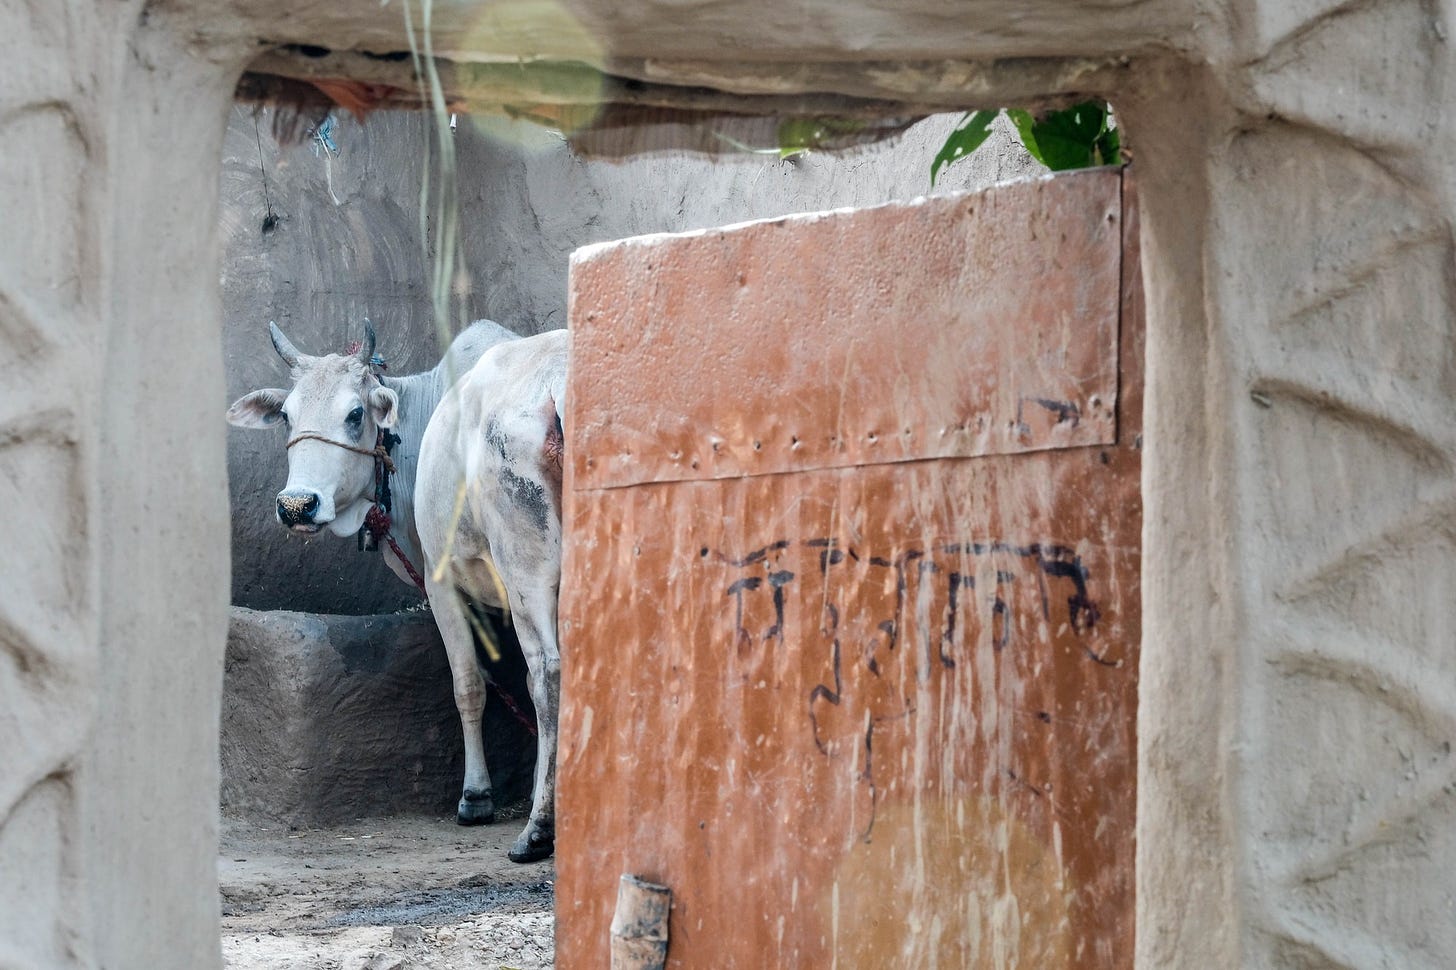 Cow inside a mud hut in remote village, Uttar Pradesh, India